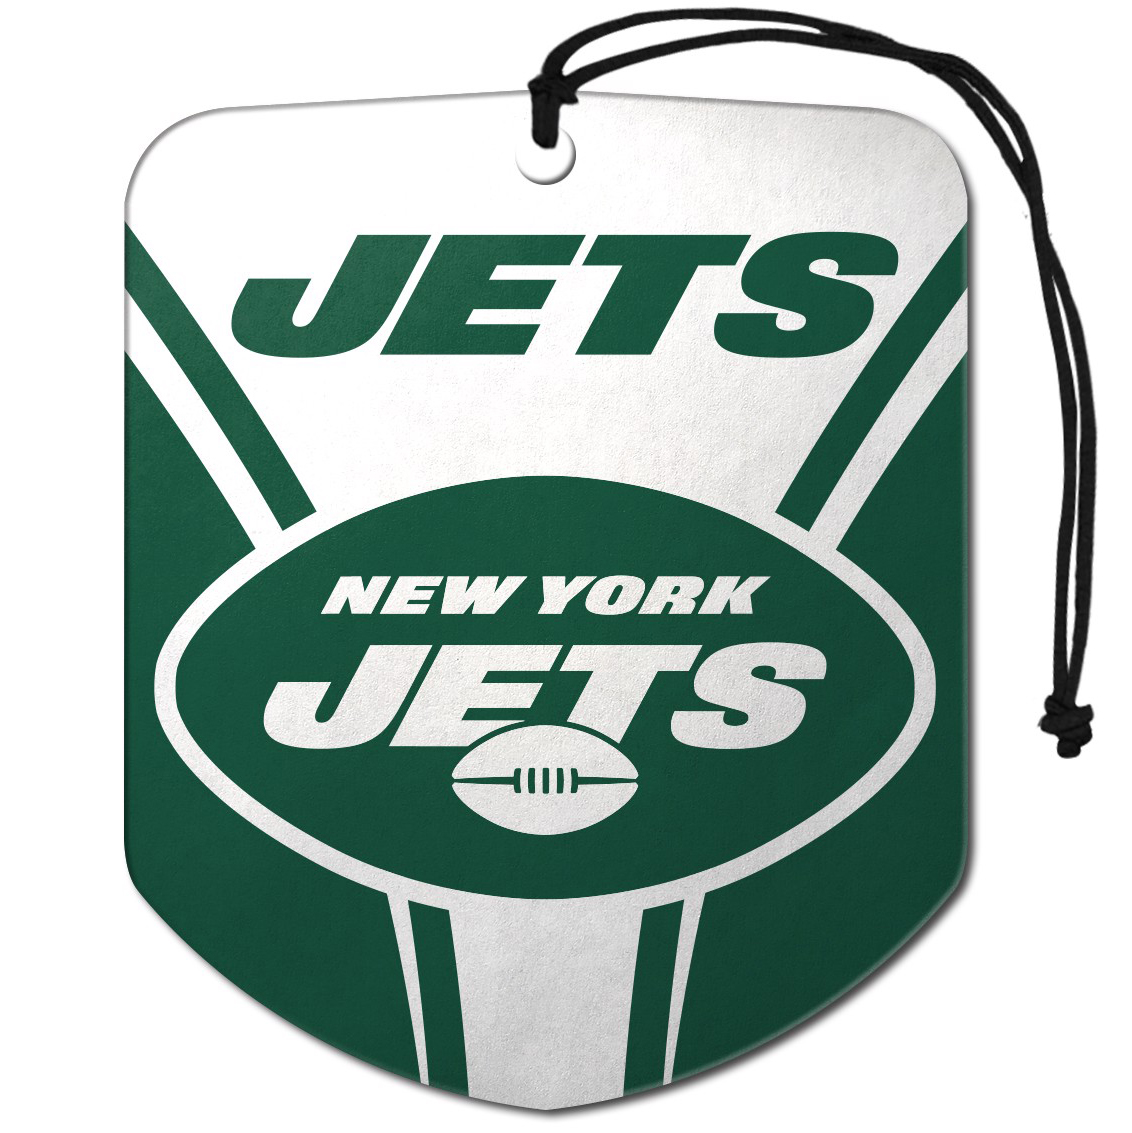 New York Jets Air Fresheners - 2 Pack